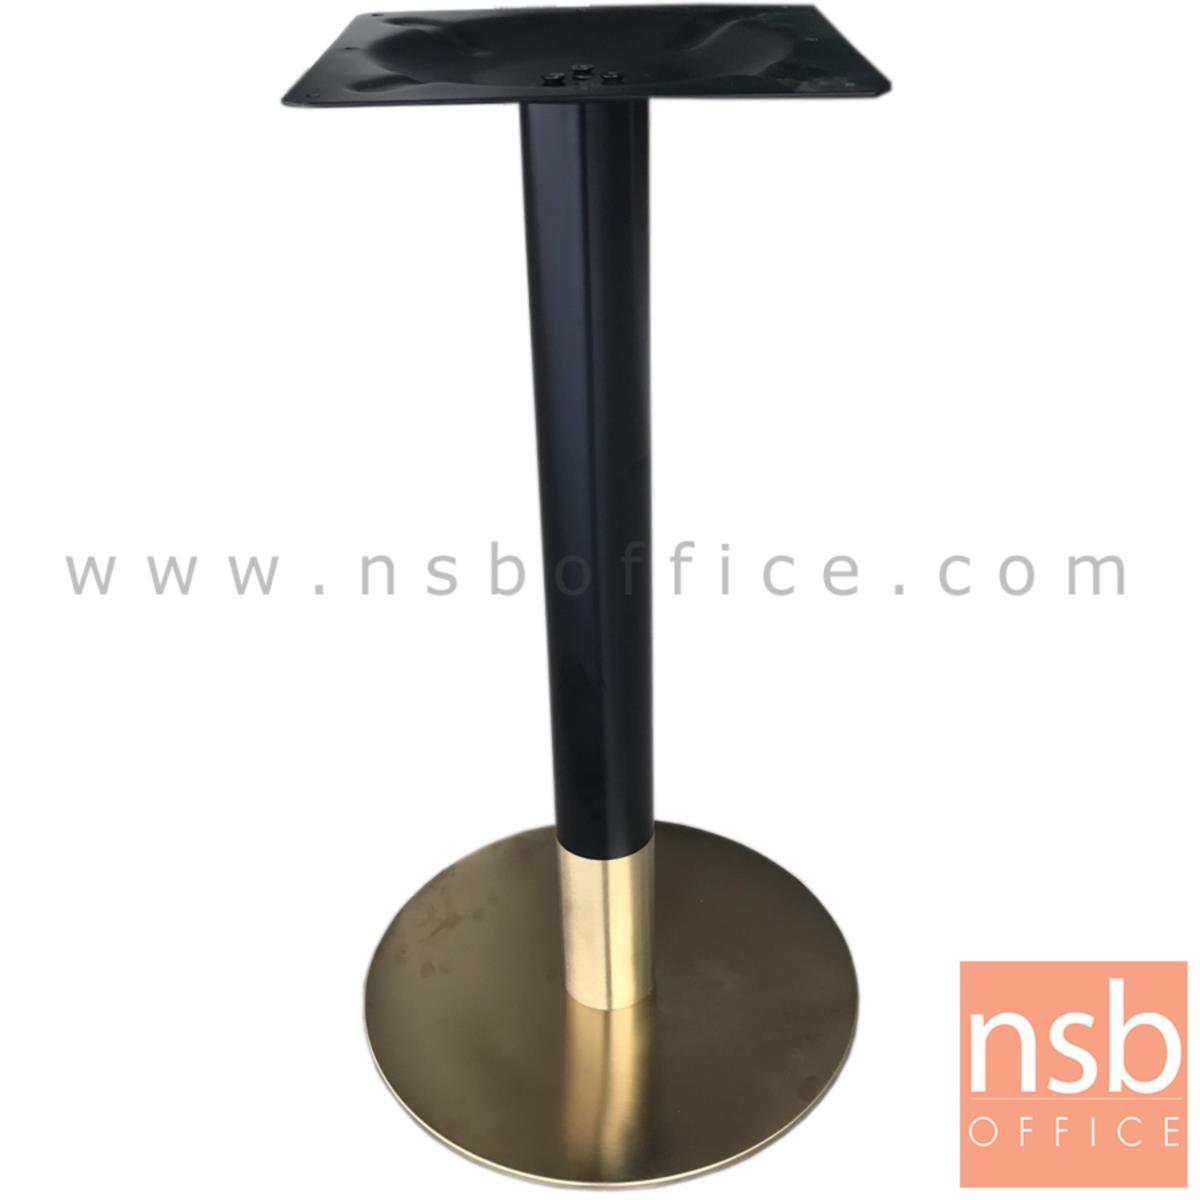 A14A226:ขาโต๊ะบาร์จานกลม (สีดำ-ทอง) BLACKGOLD  